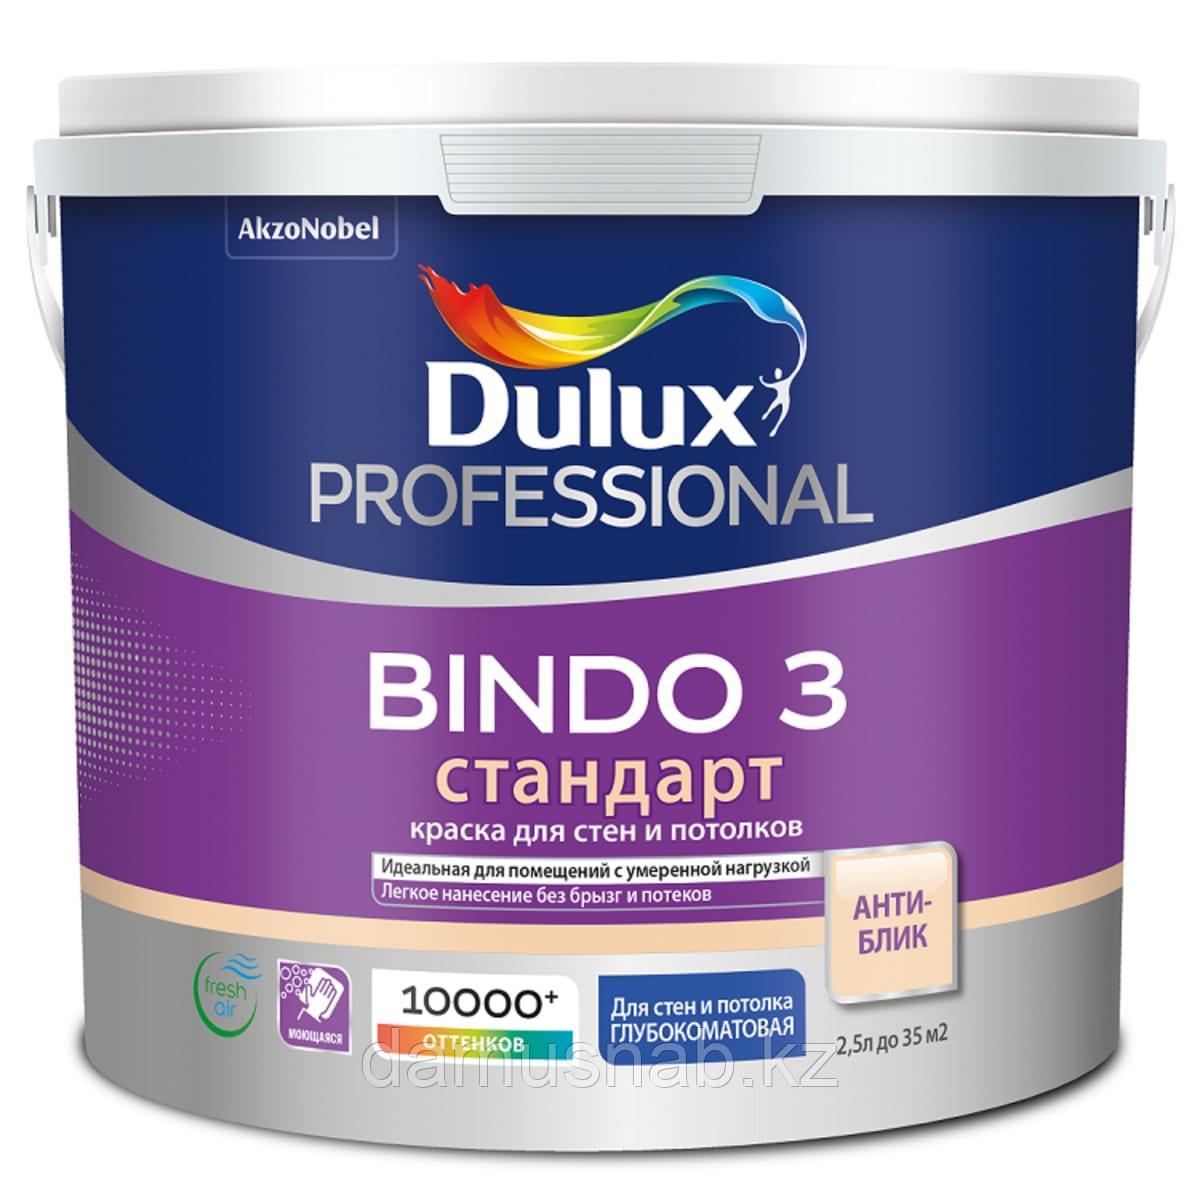 Dulux Pofessional BINDO 3 глубокоматовая BW 2.5л